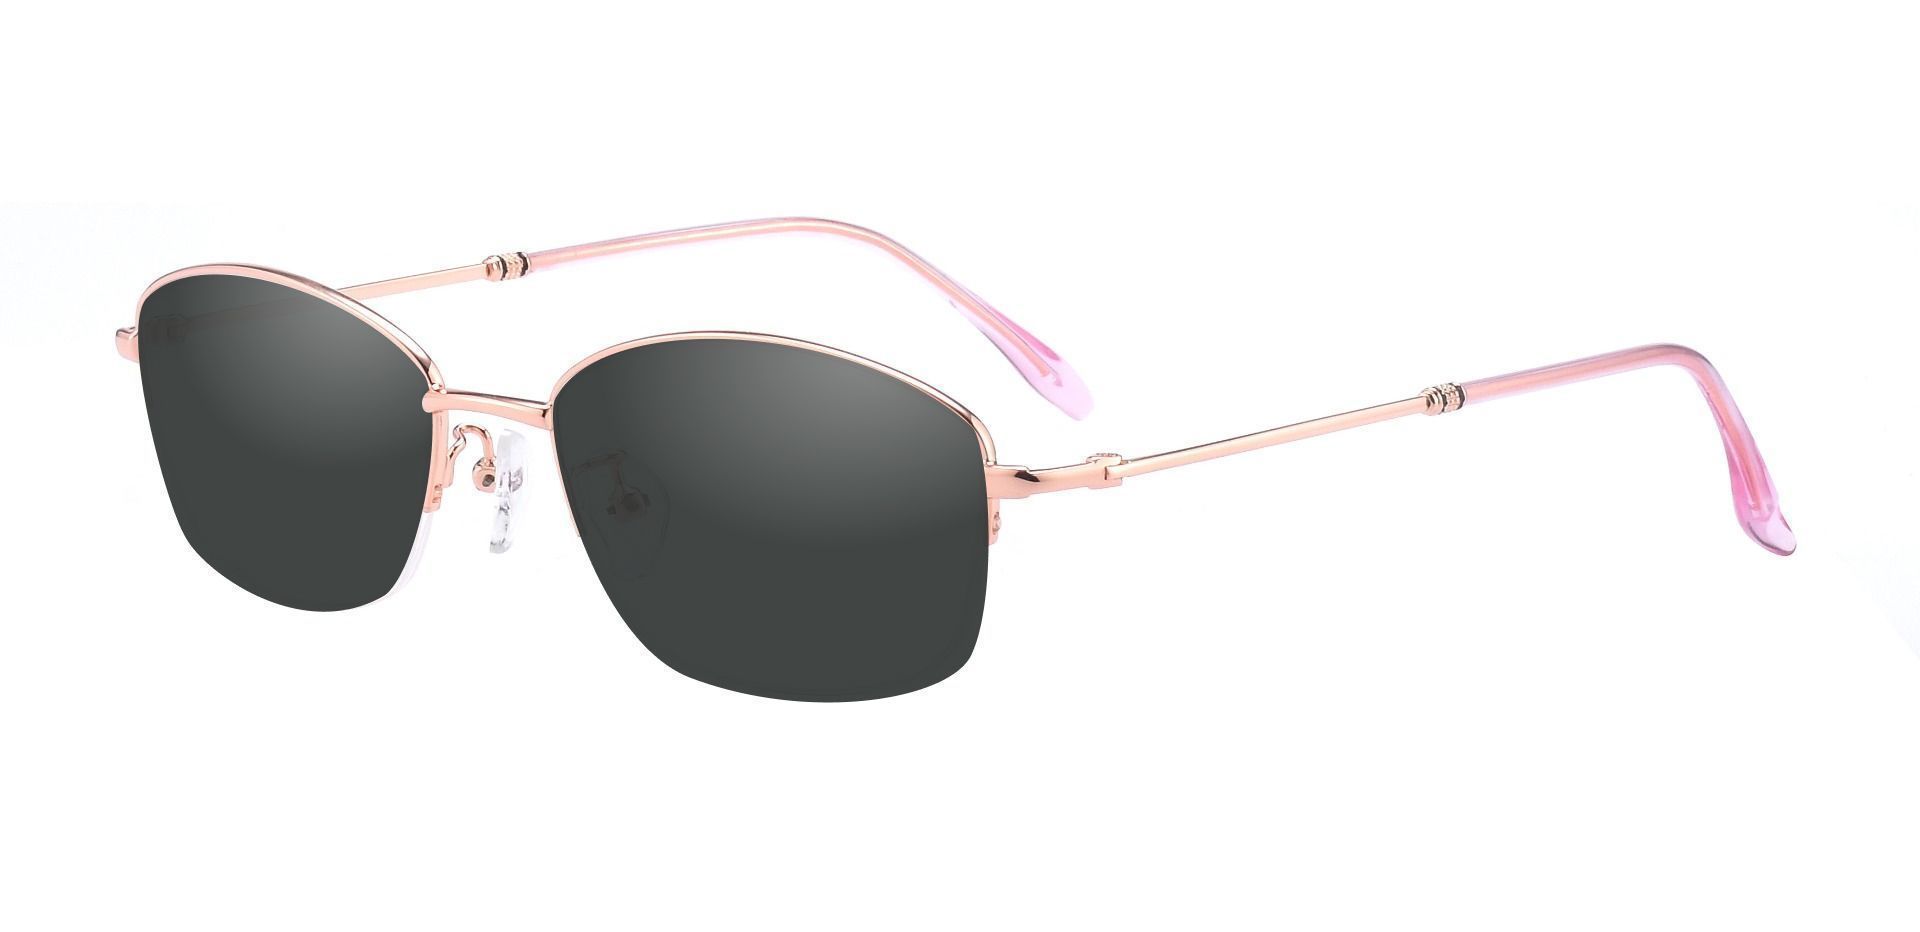 Mendoza Oval Non-Rx Sunglasses - Rose Gold Frame With Gray Lenses